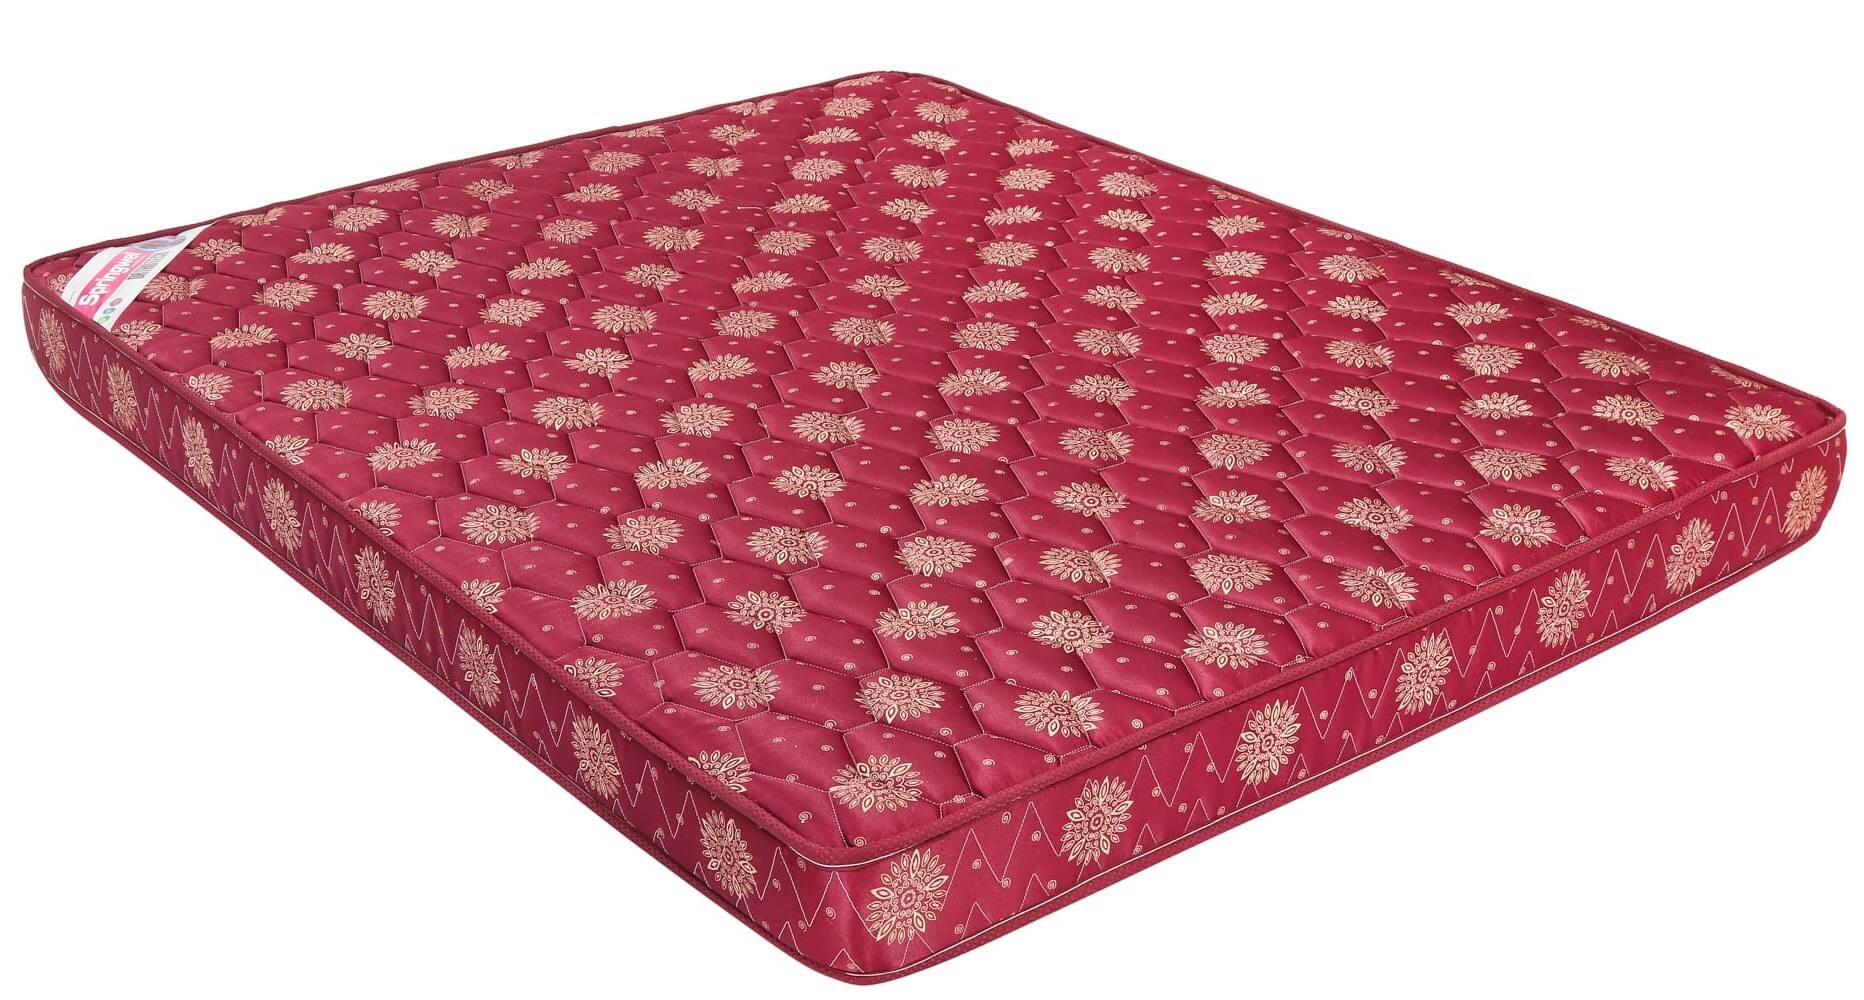 springwel ecosoft 6 inch queen spring mattress